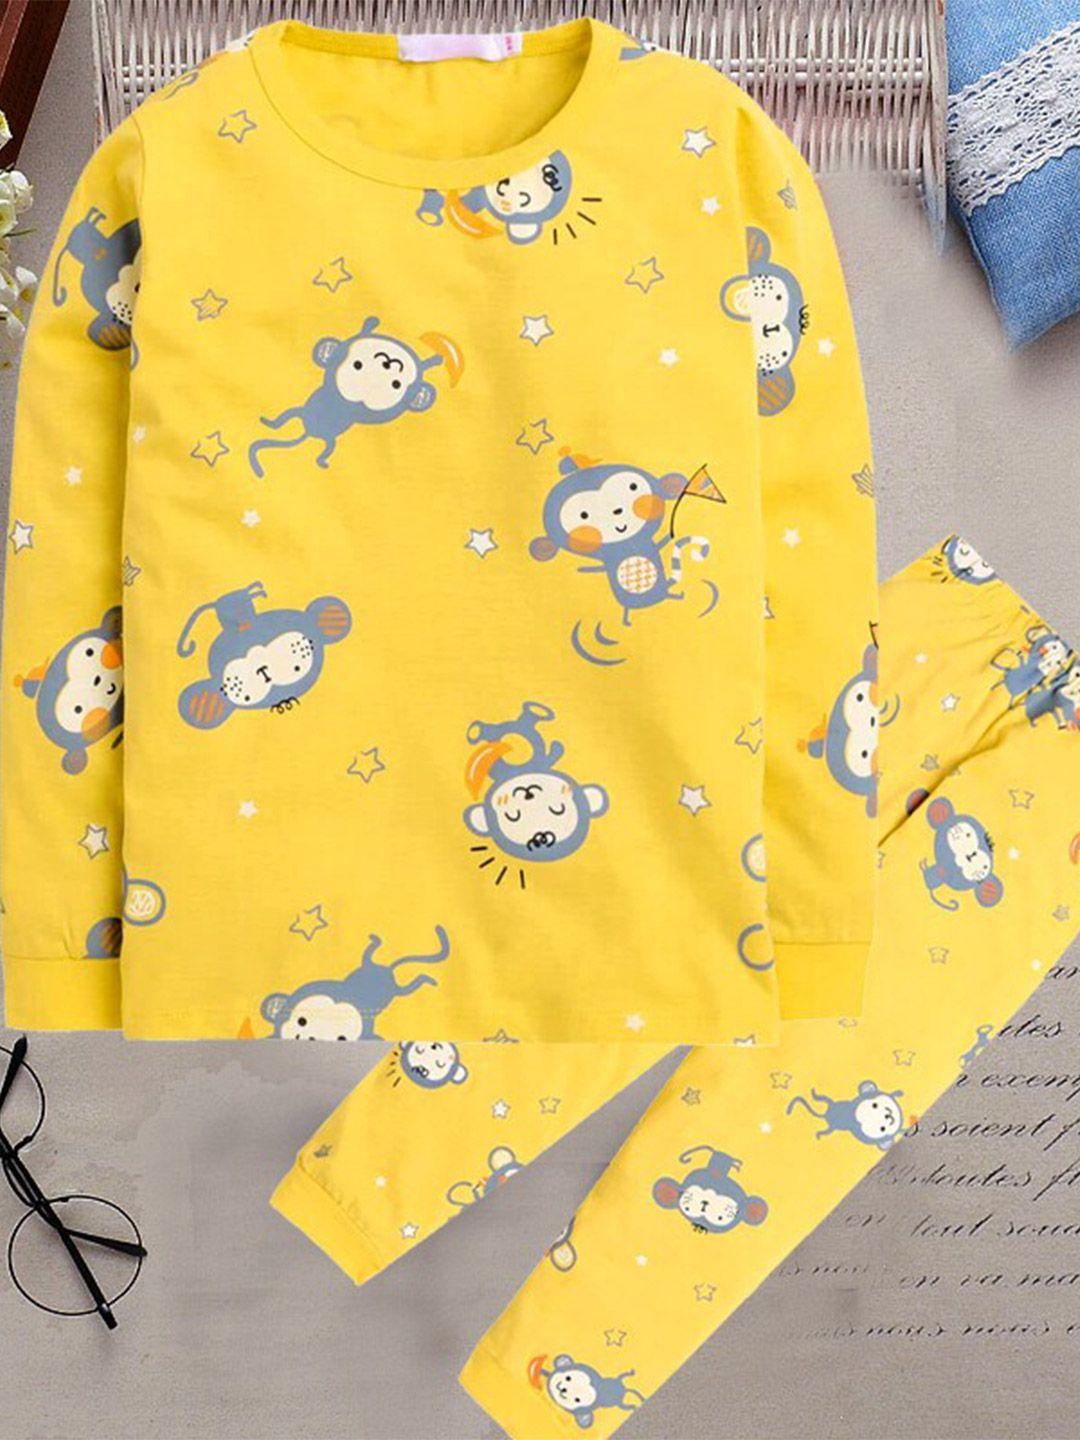 googo gaaga boys yellow & grey printed t-shirt with pyjamas